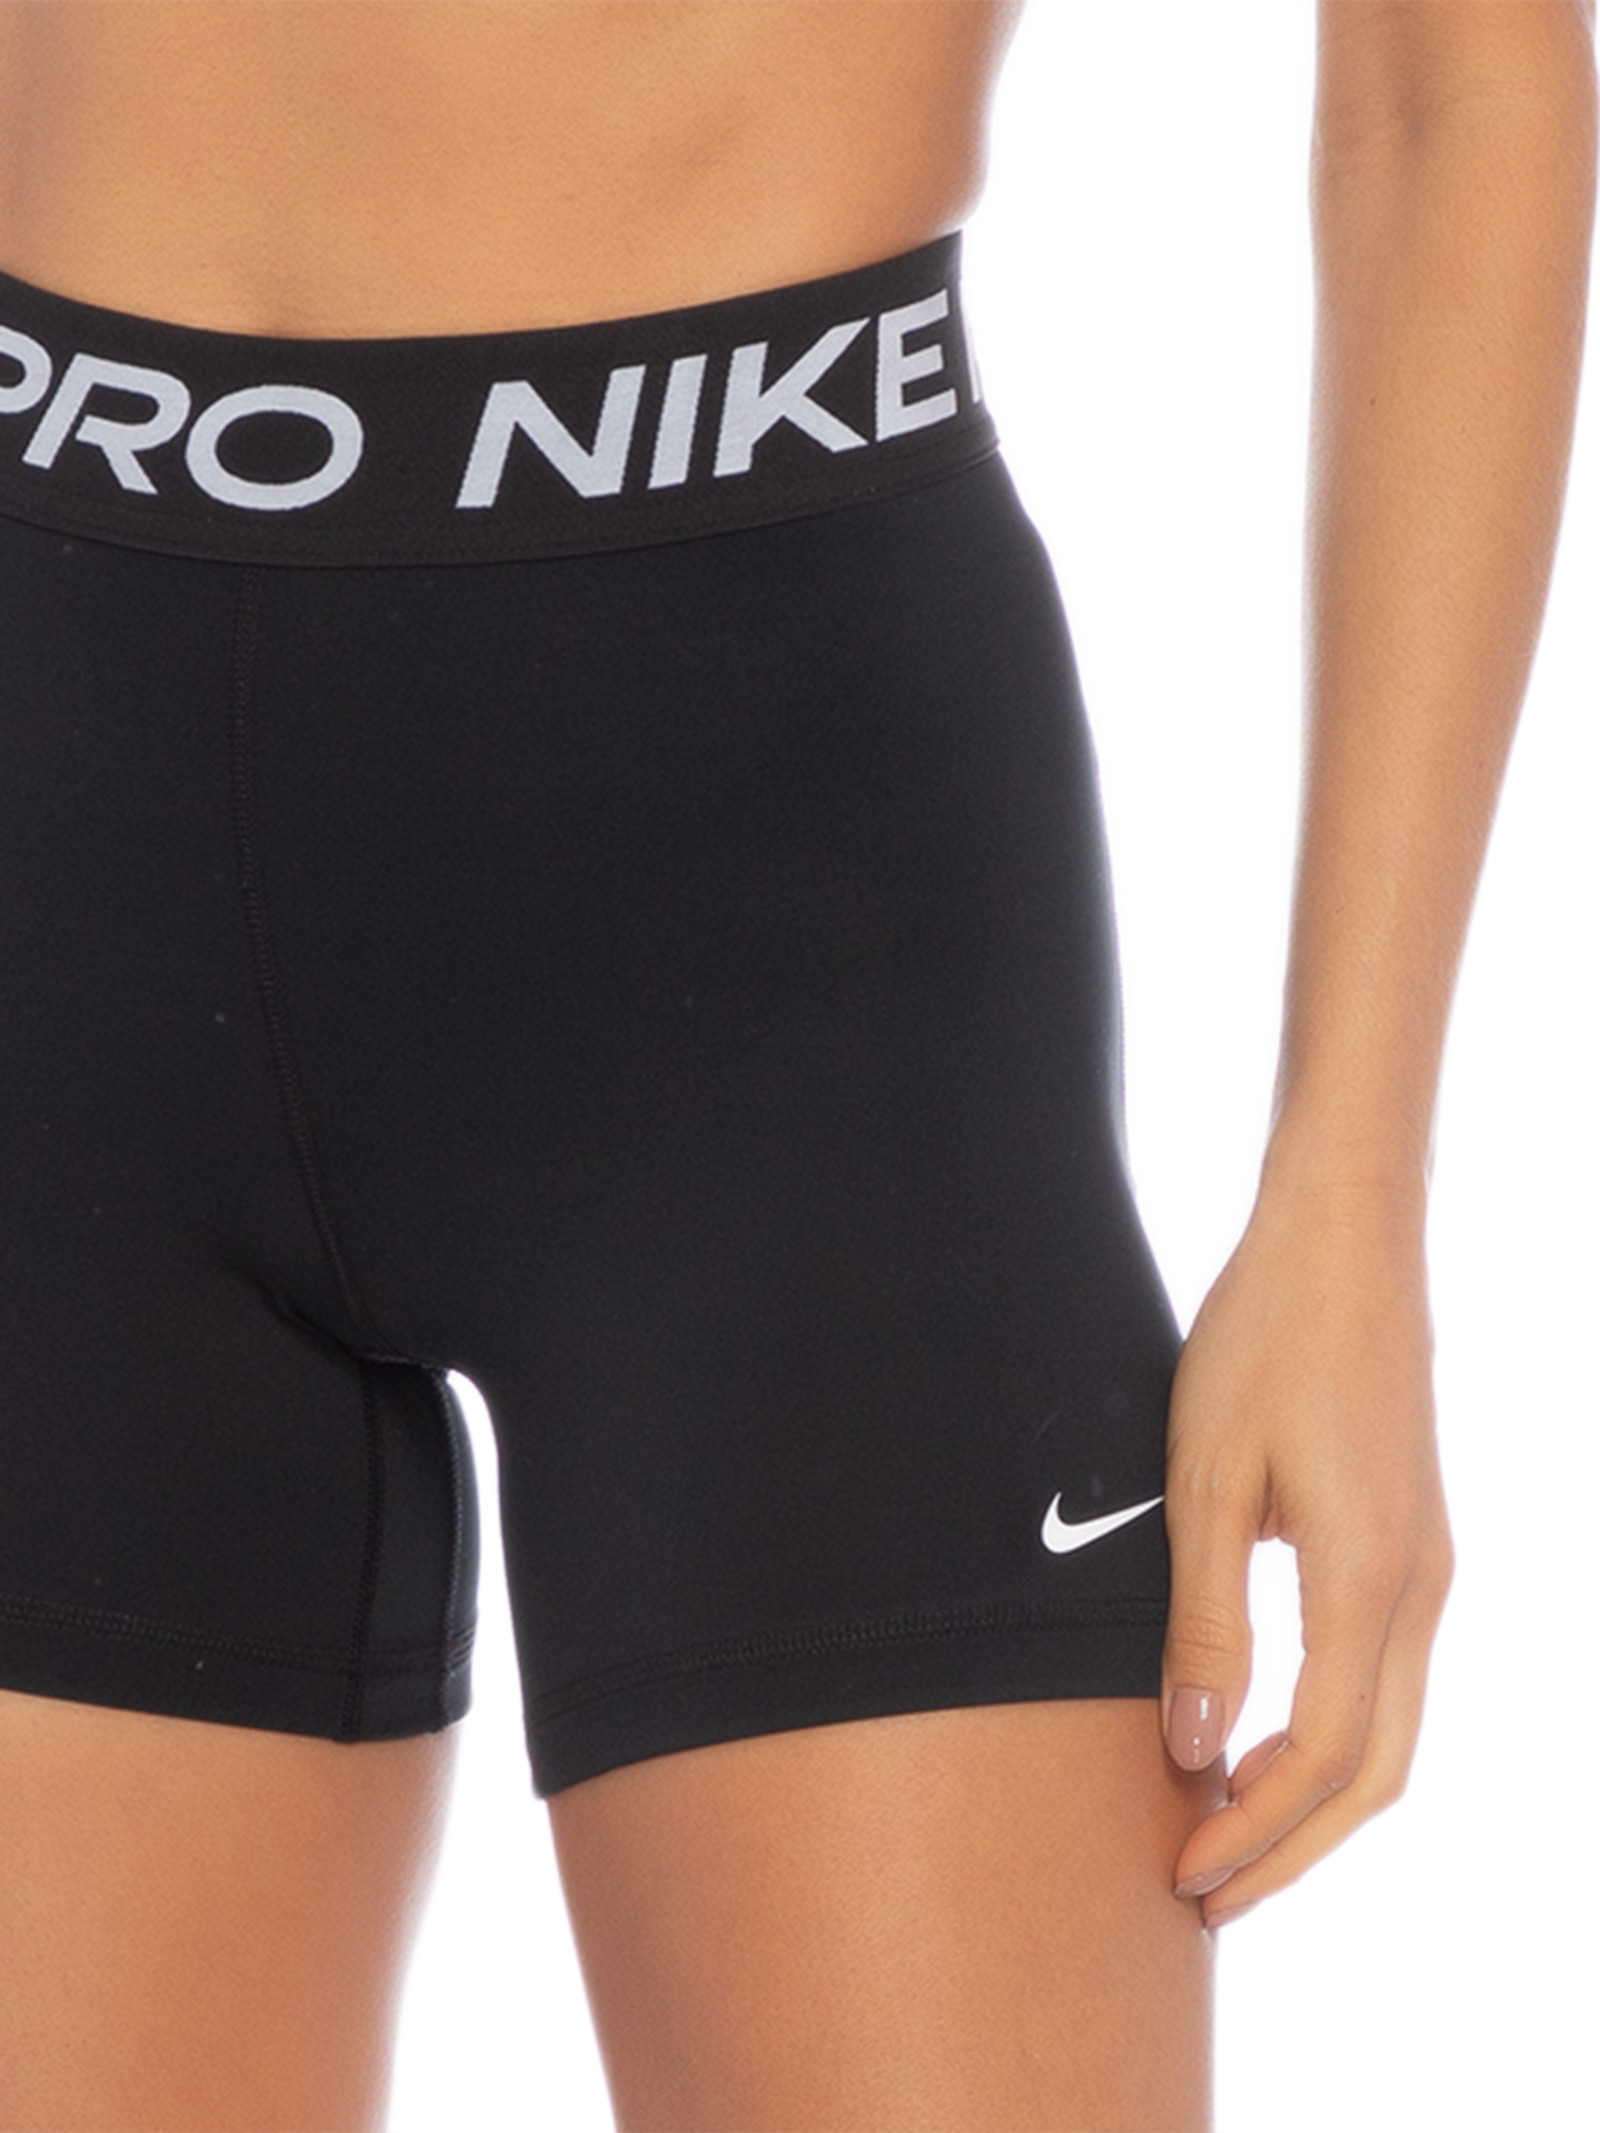 Shorts Nike Pro - Feminino